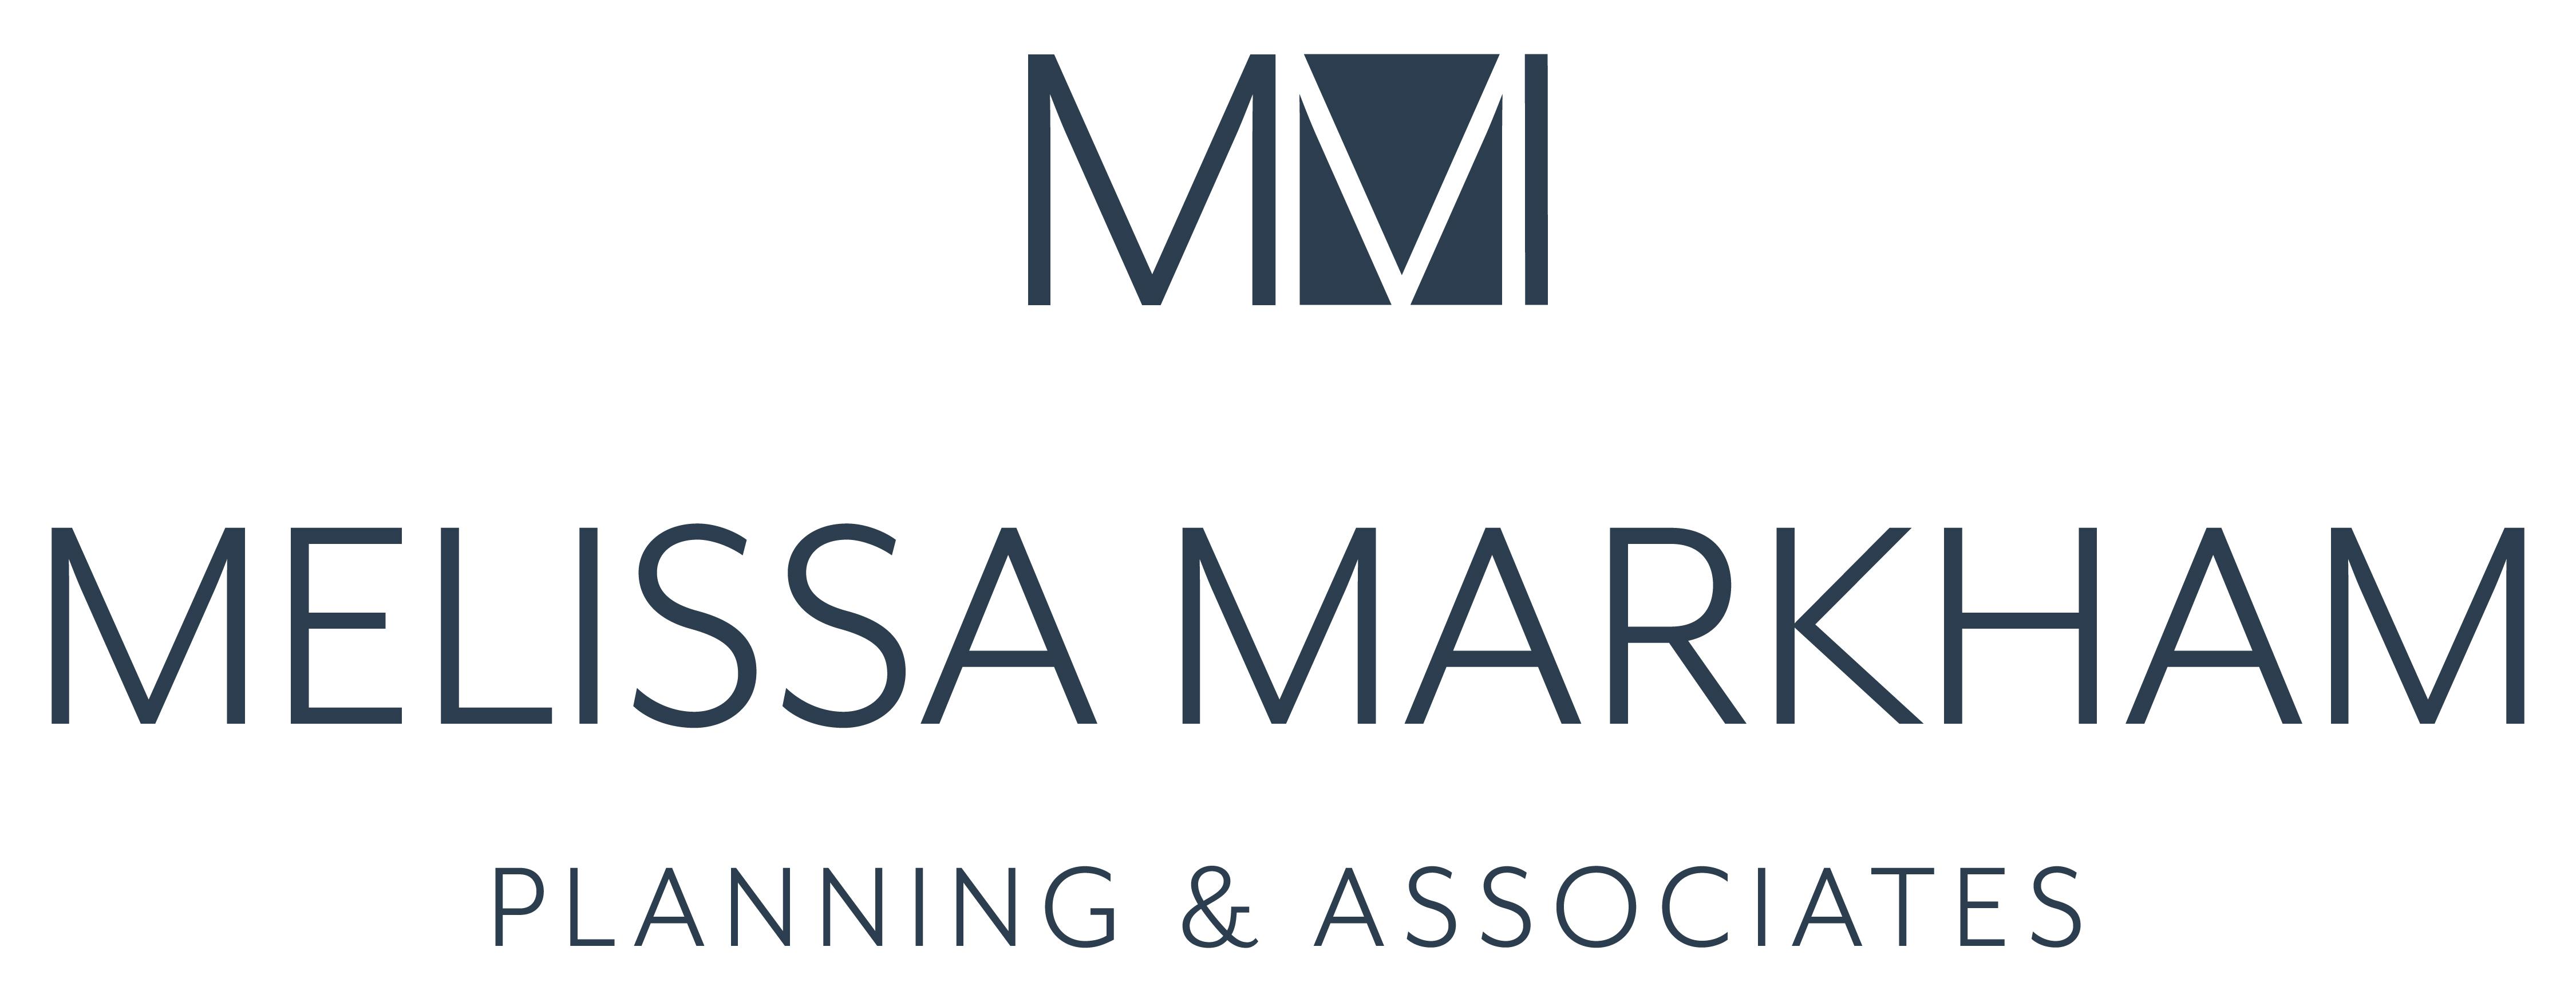 Melissa Markham Planning & Associates Logo